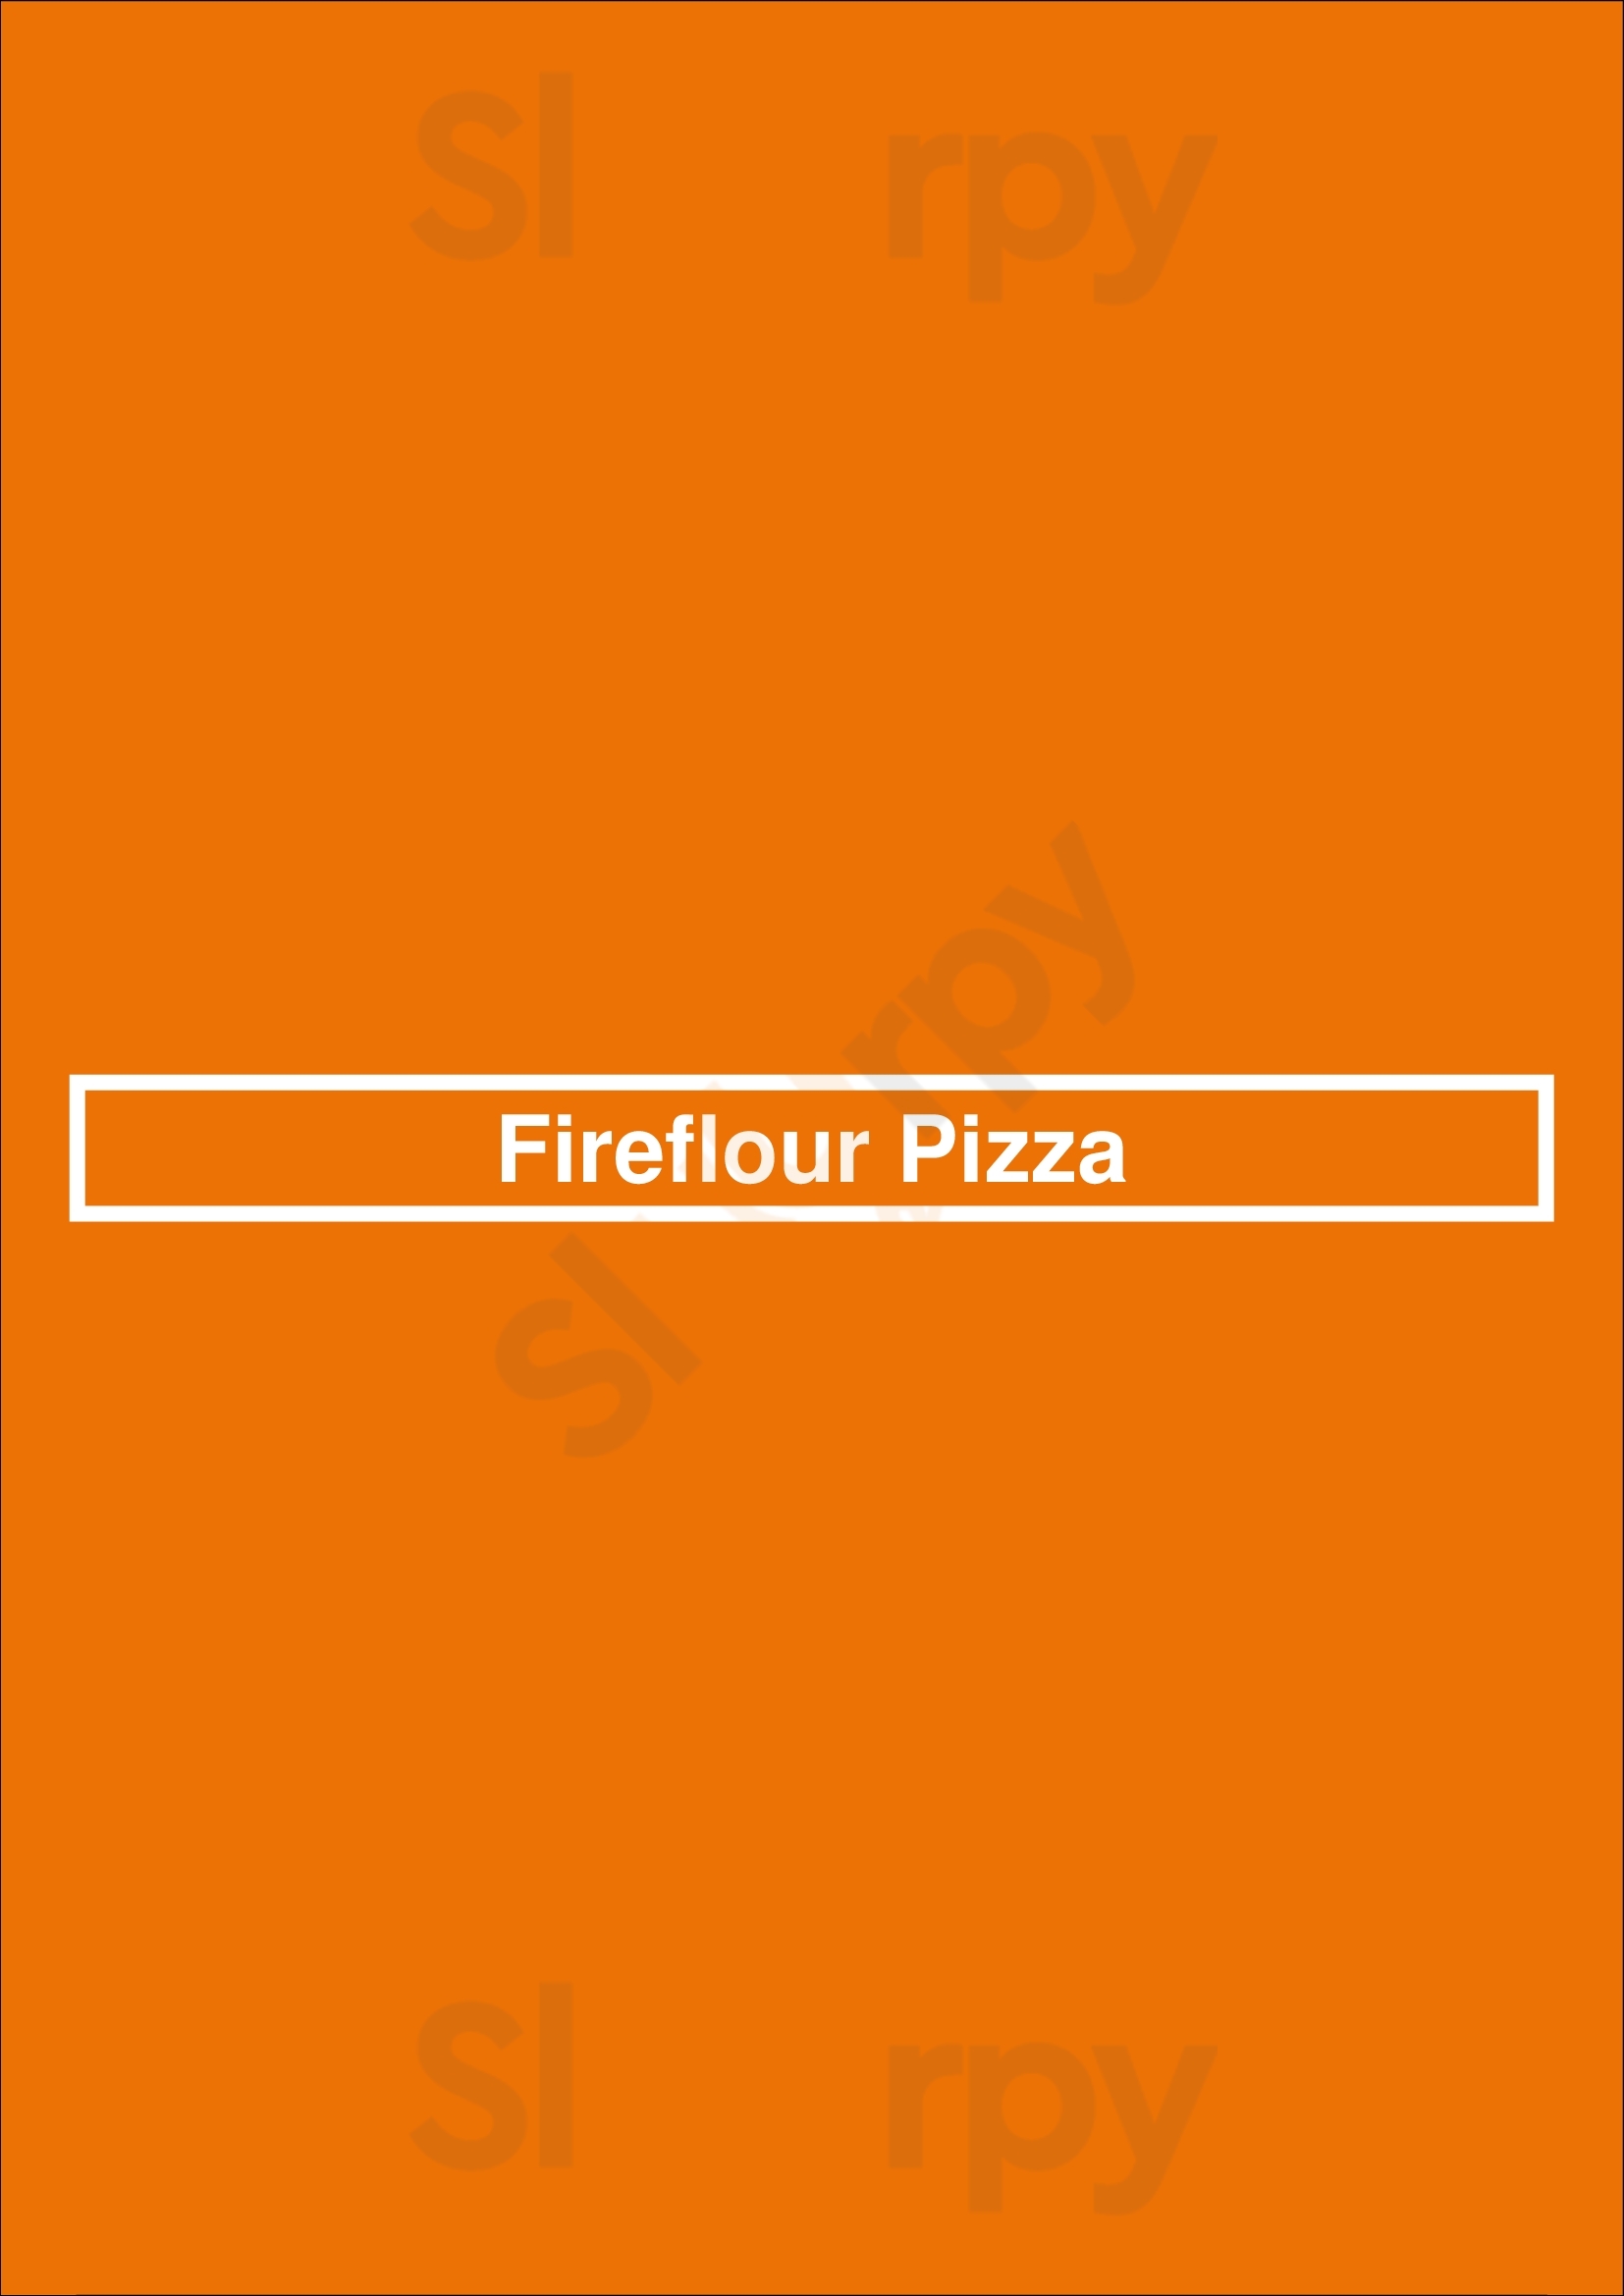 Fireflour Pizza Bismarck Menu - 1